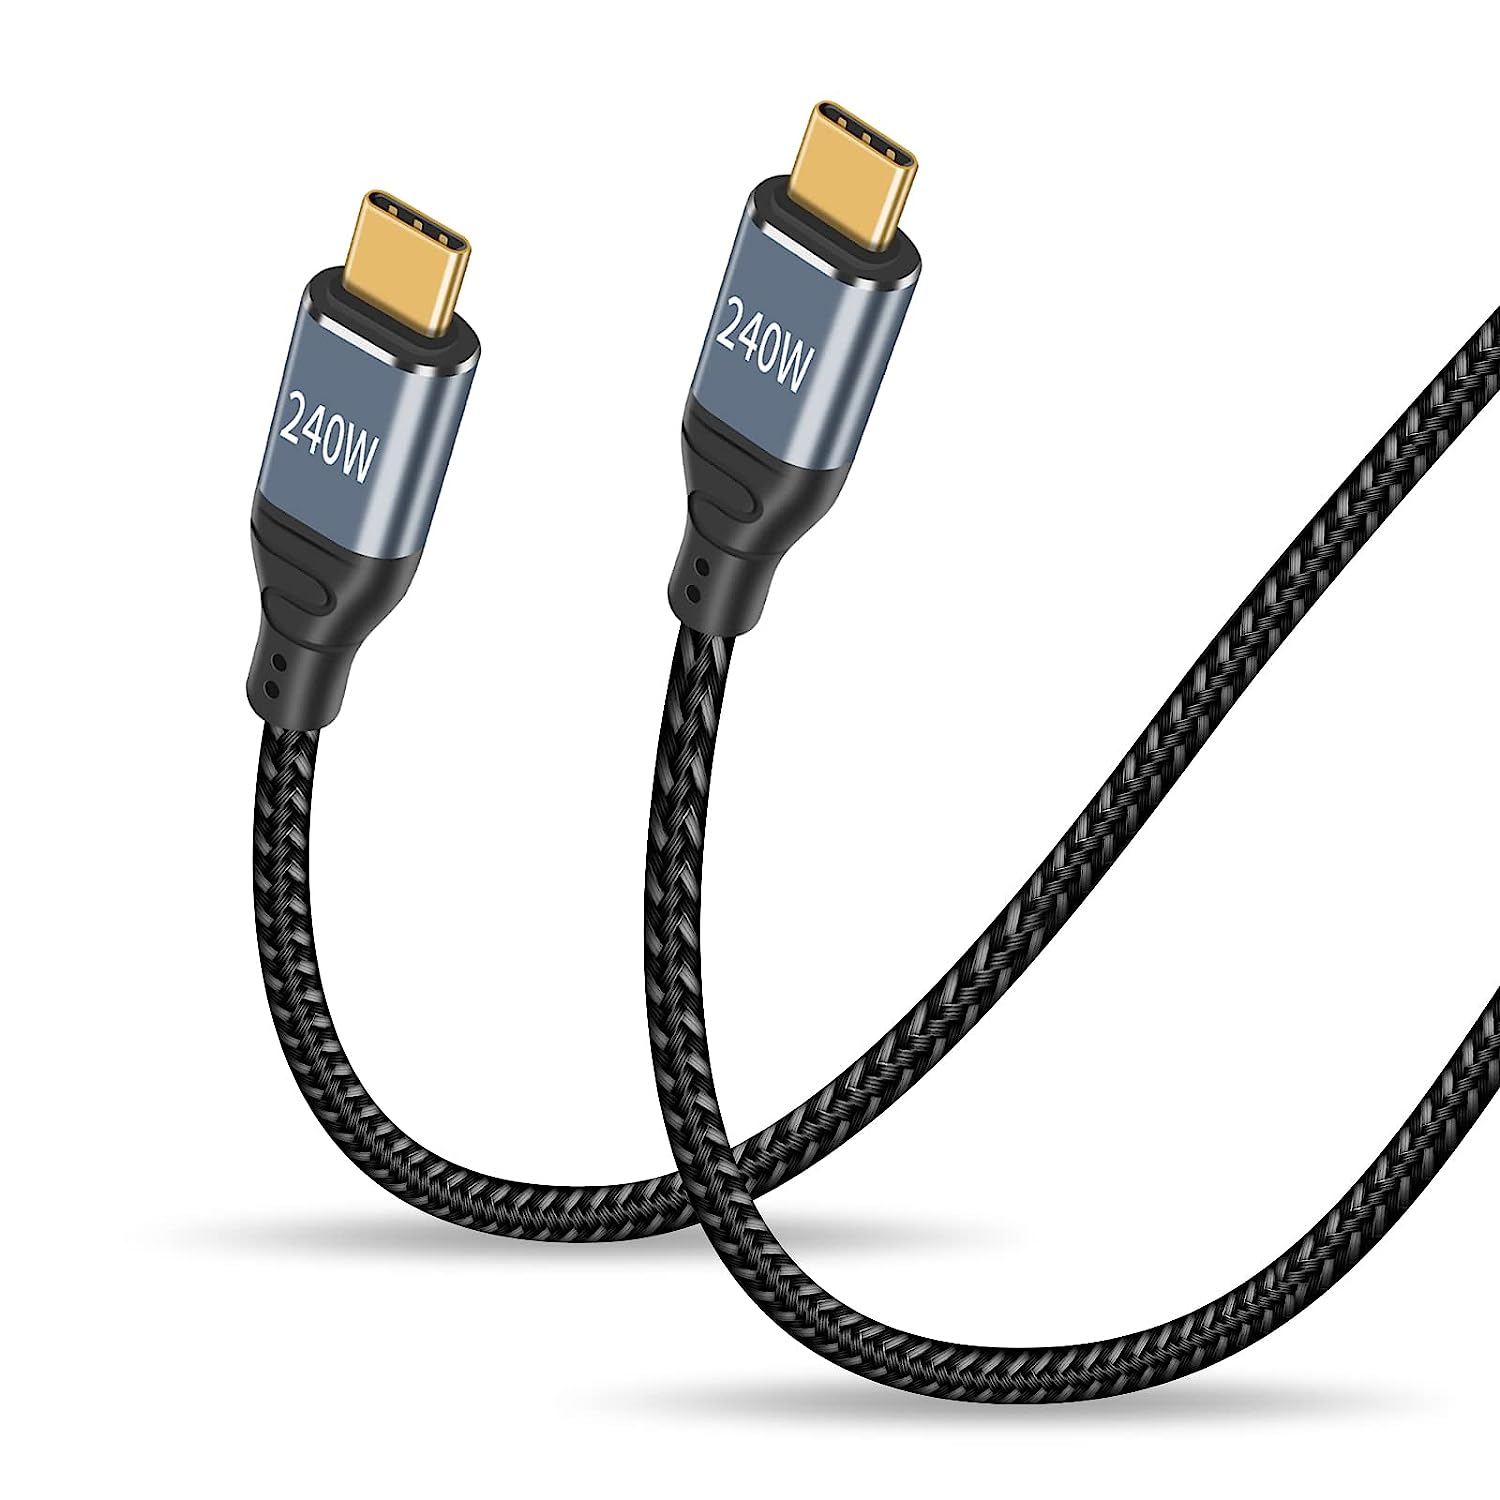 Duttek USB C to USB C Charging Cable 6.6FT/2M, 240W [...]